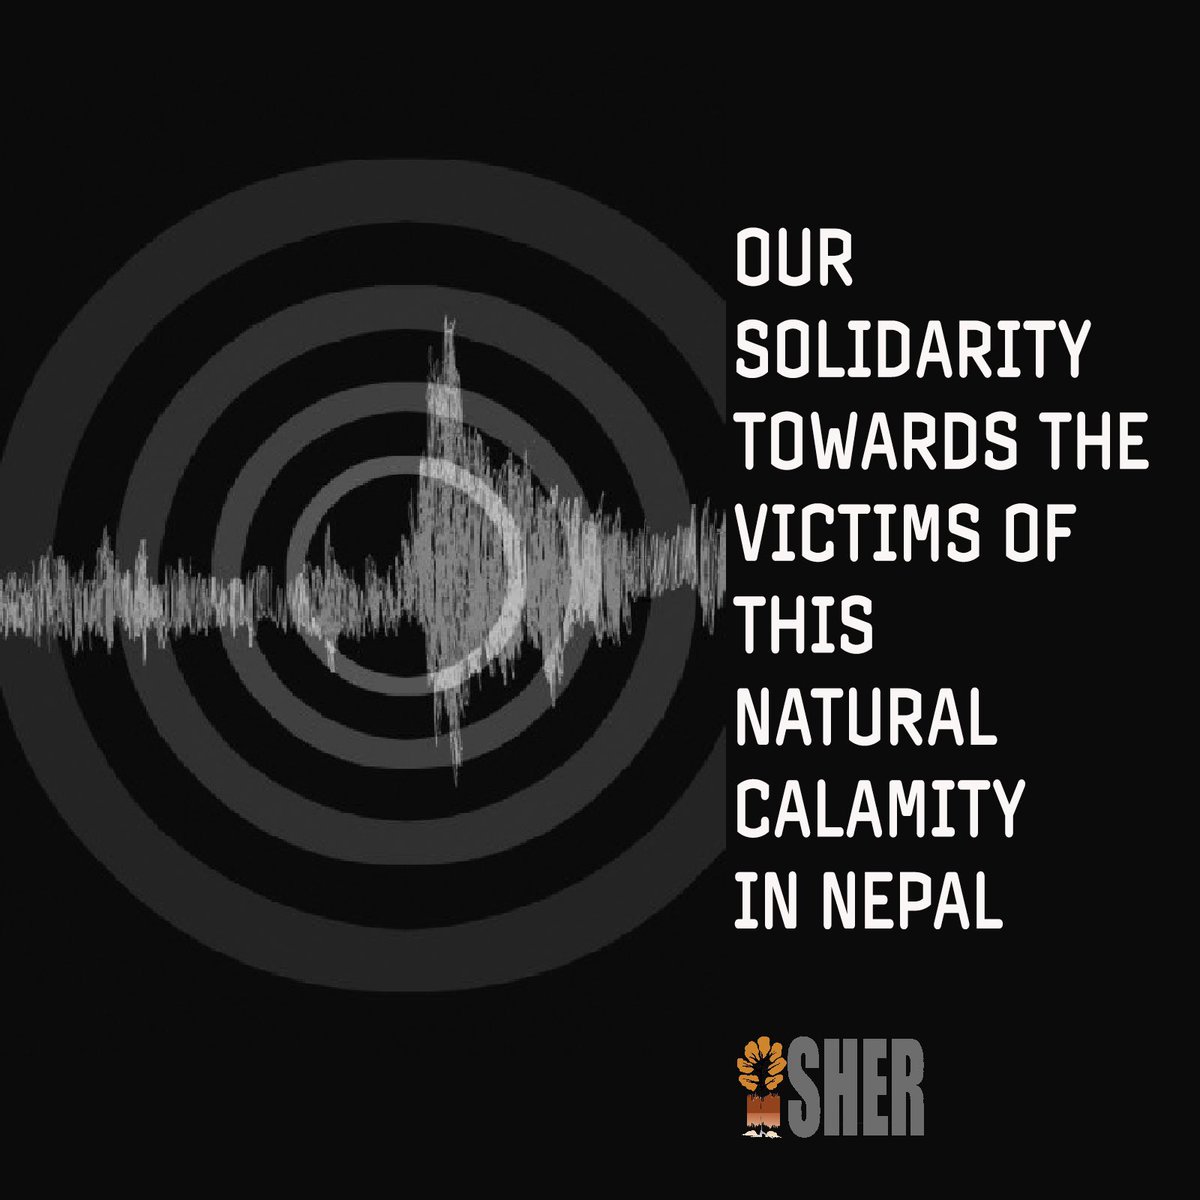 #earthquake #earthquakenepal #earthquakes #naturalcalamity 

@BittuSahgal @SanctuaryAsia